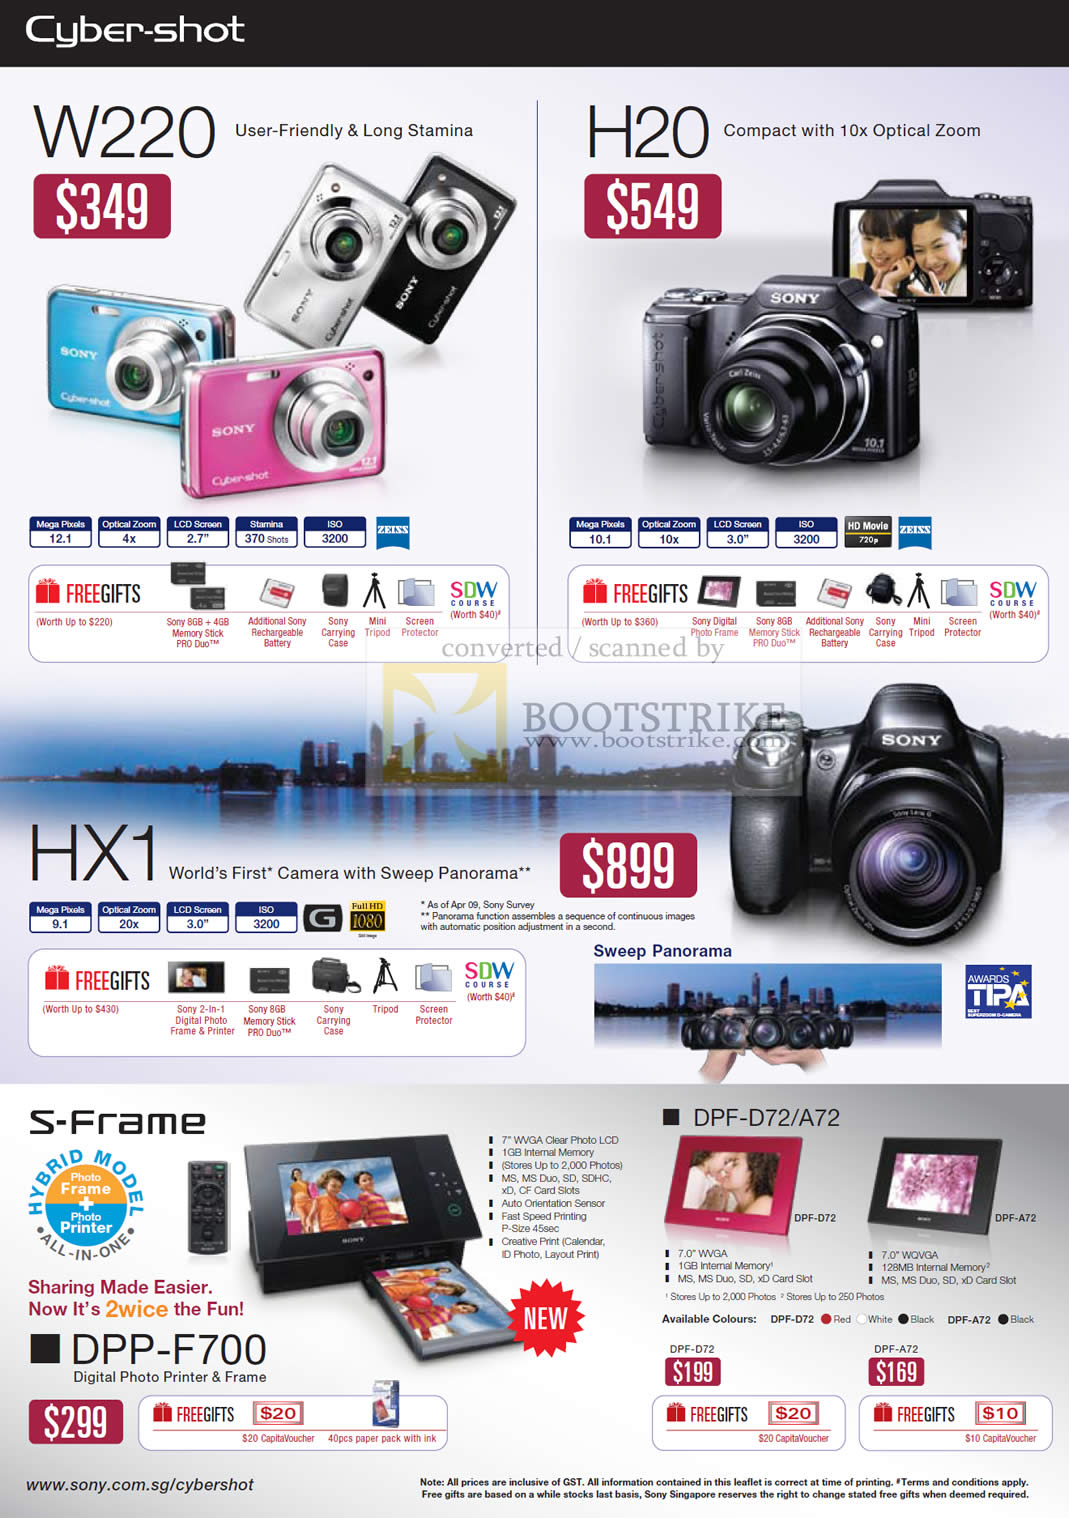 Sitex 2009 price list image brochure of Sony Cybershot Digital Cameras W220 H20 HX1 S Frame DPP Digital Photo Frames